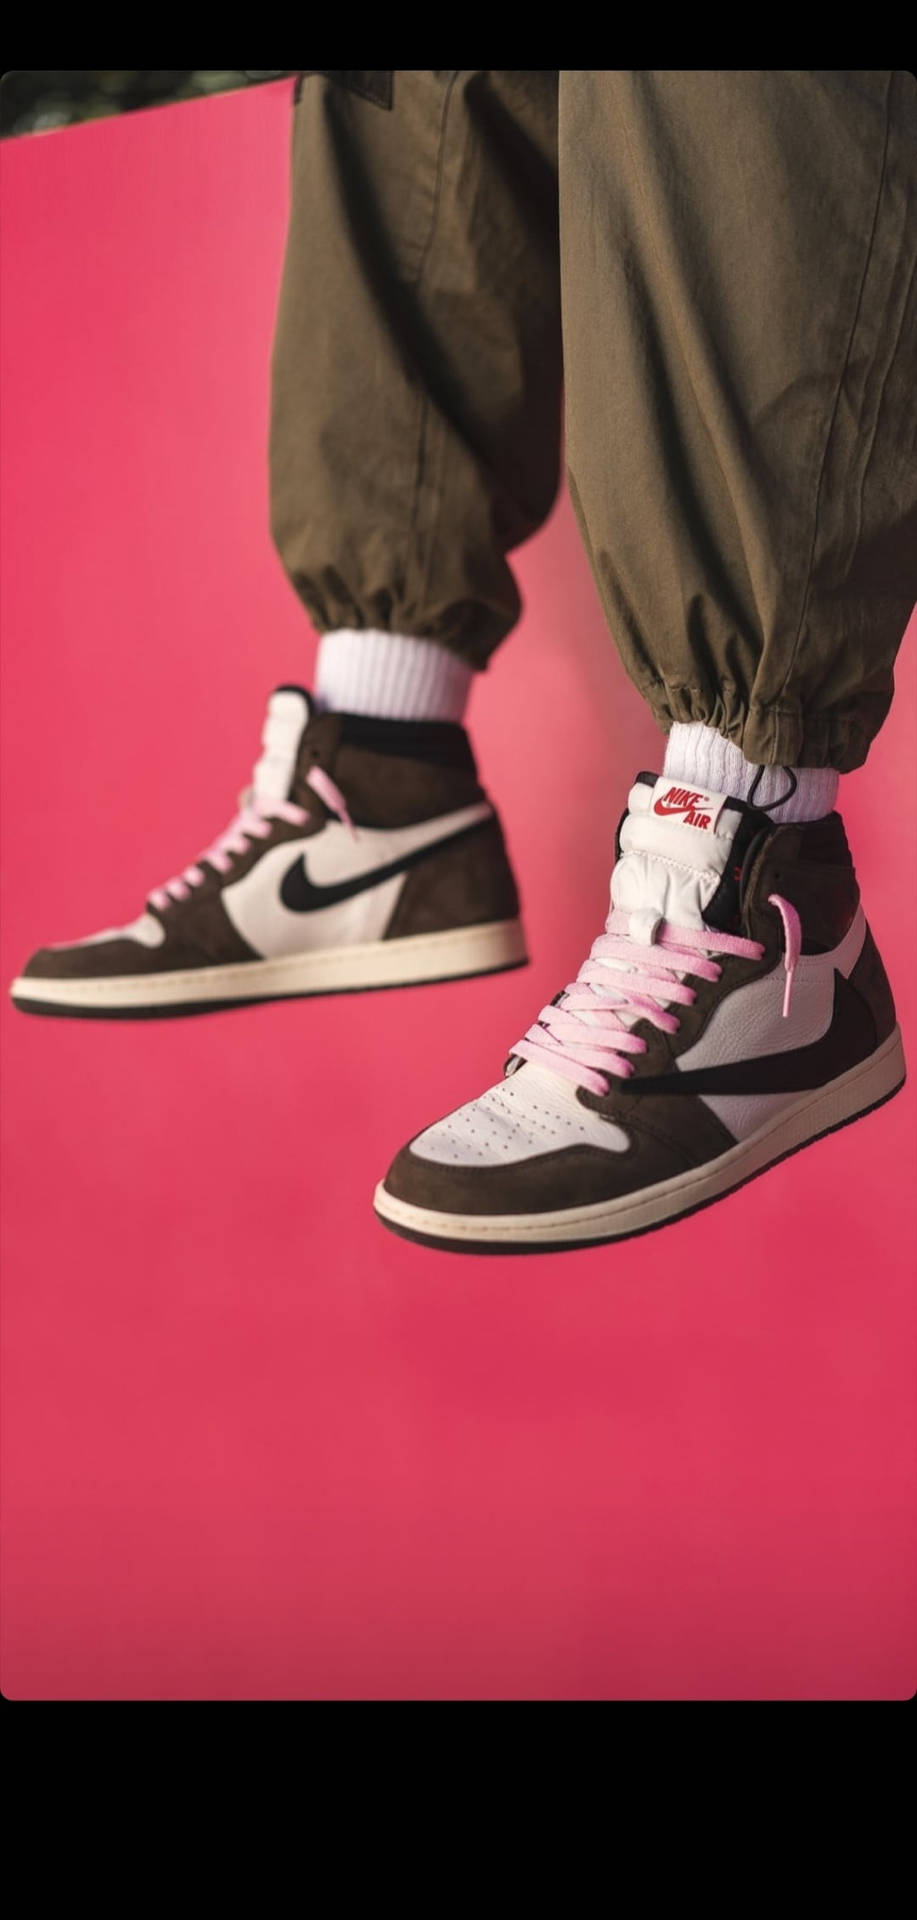 Stylish Photograph Of Nike Jordan 1 Wallpaper